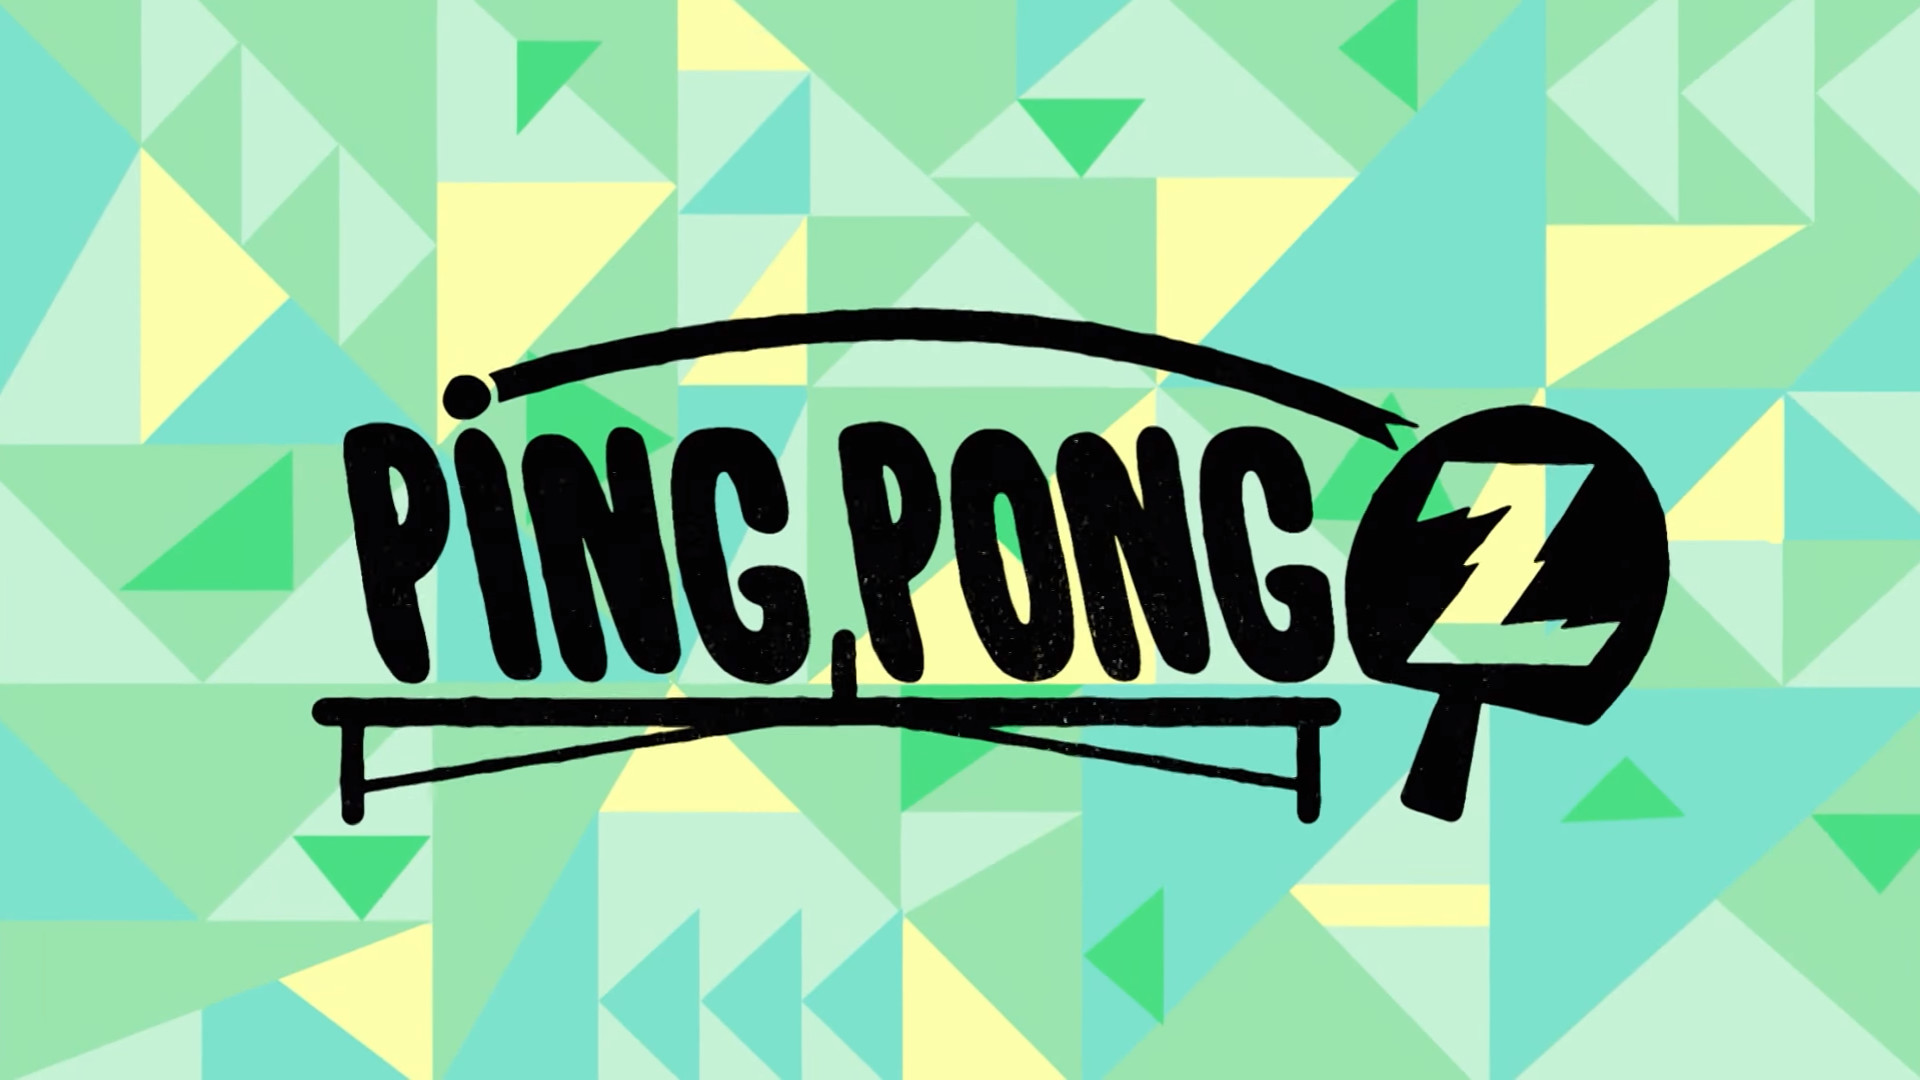 1920x1080 Ping Pong Z